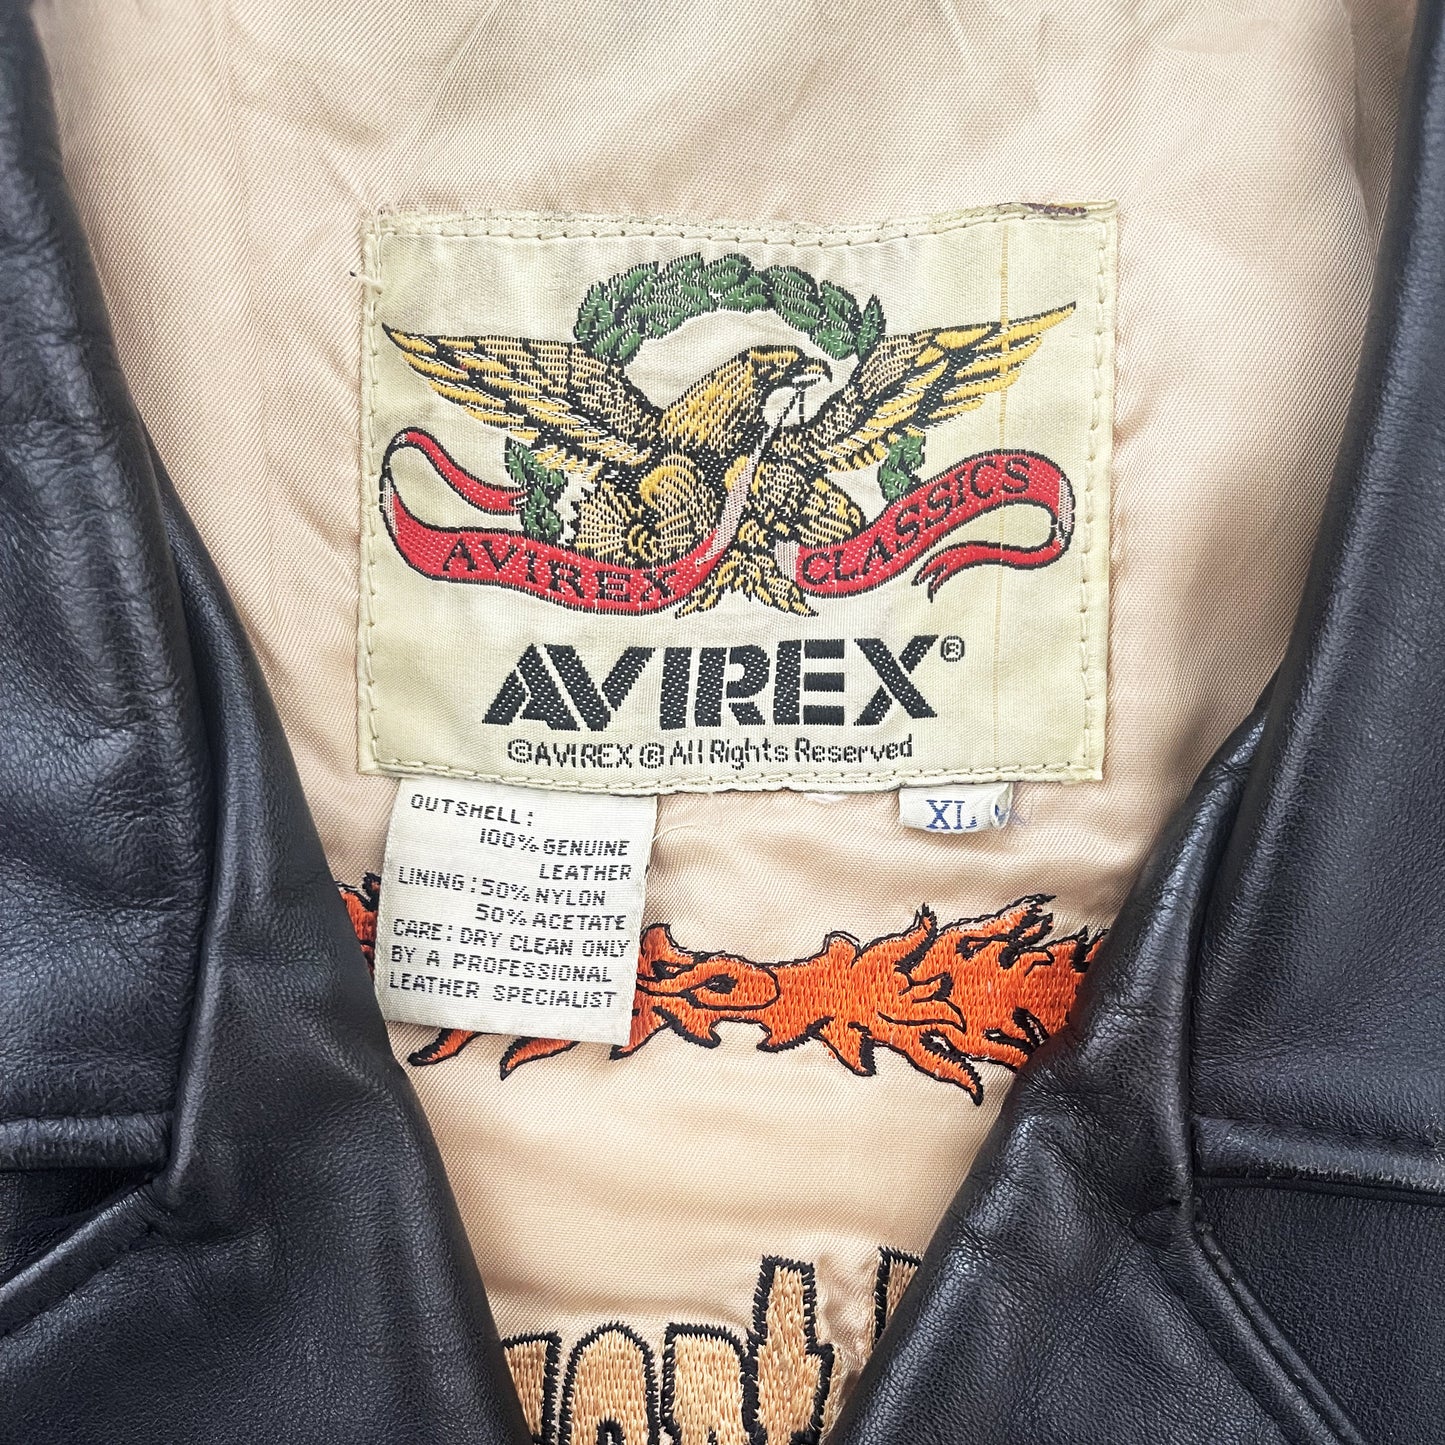 Avirex Leather Biker Motorcycle Jacket - XL